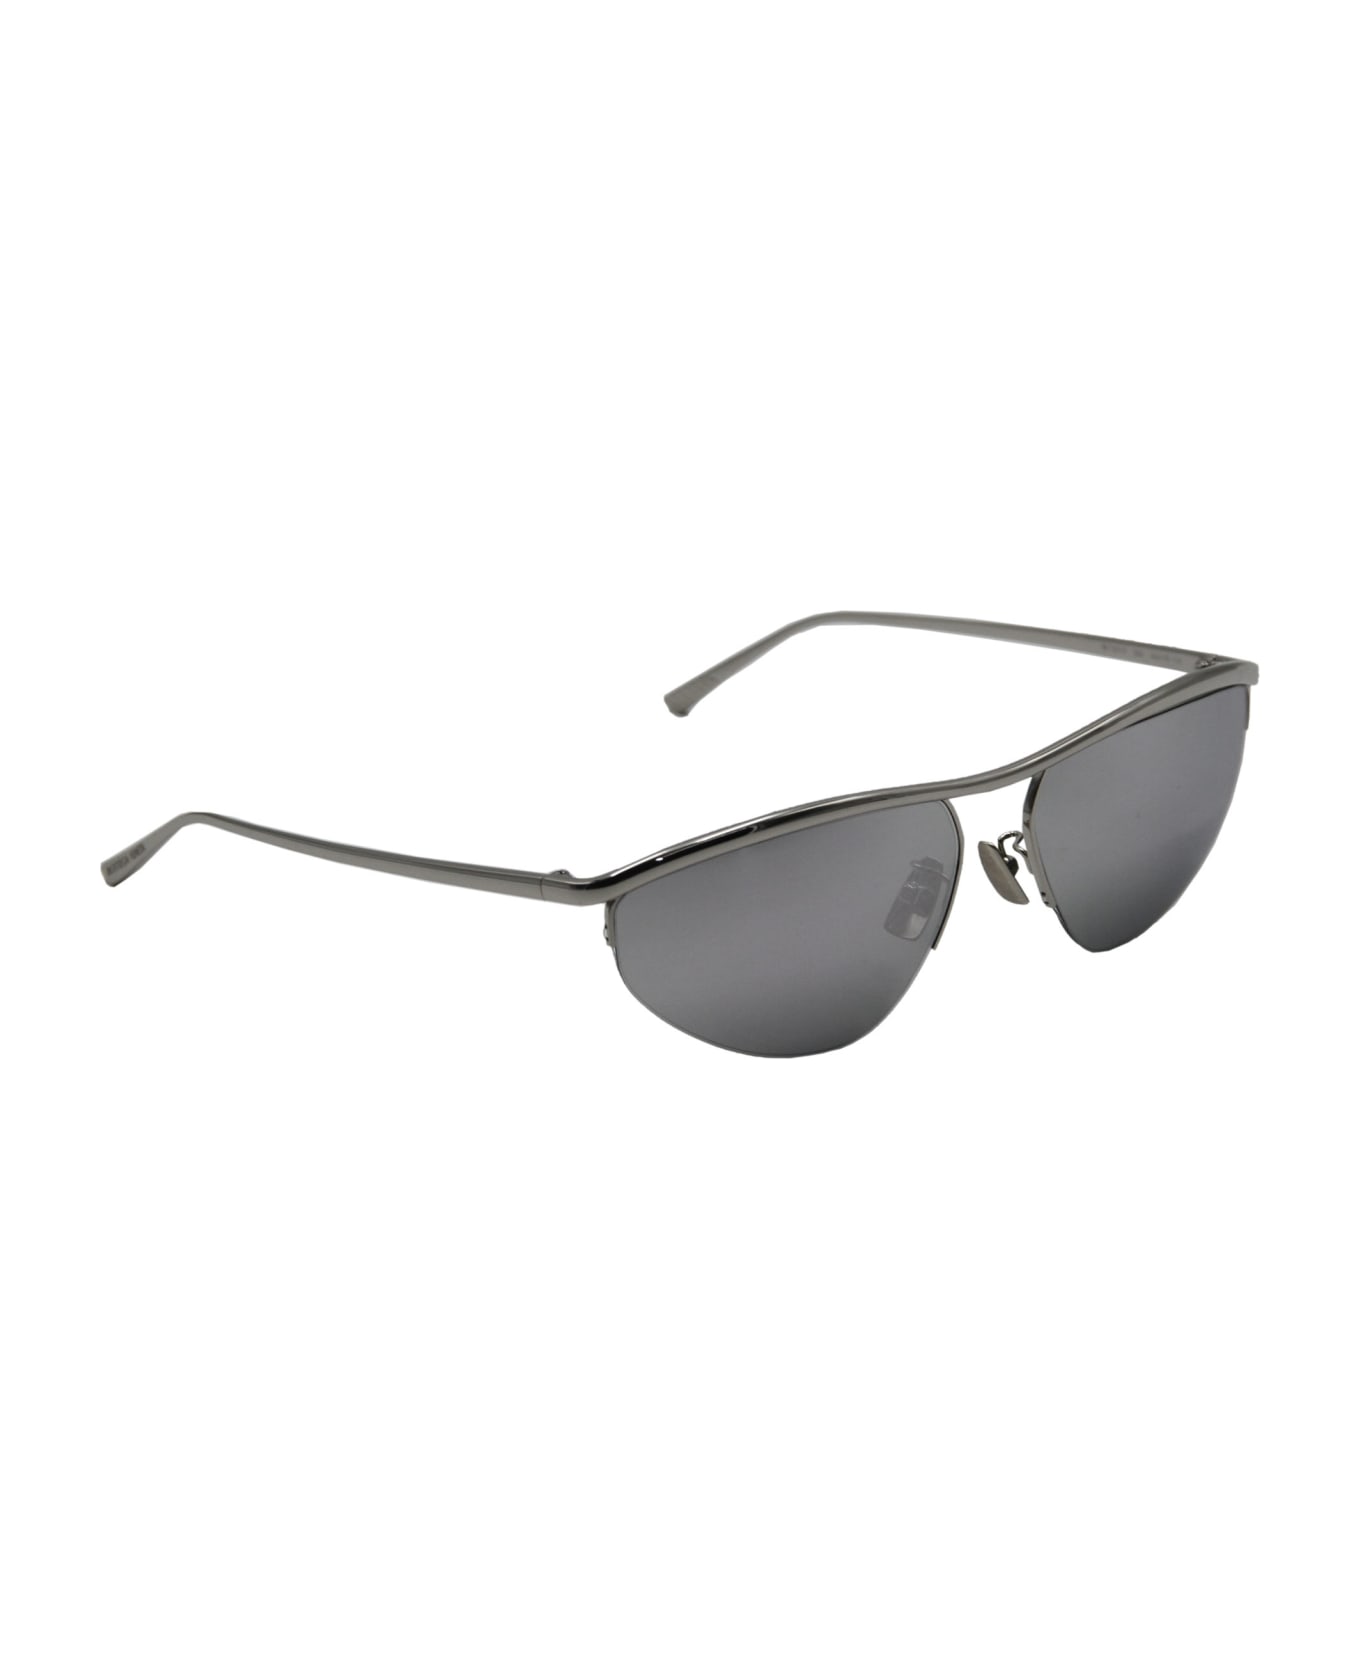 Bottega Veneta Eyewear Half Frame Sunglasses - silver